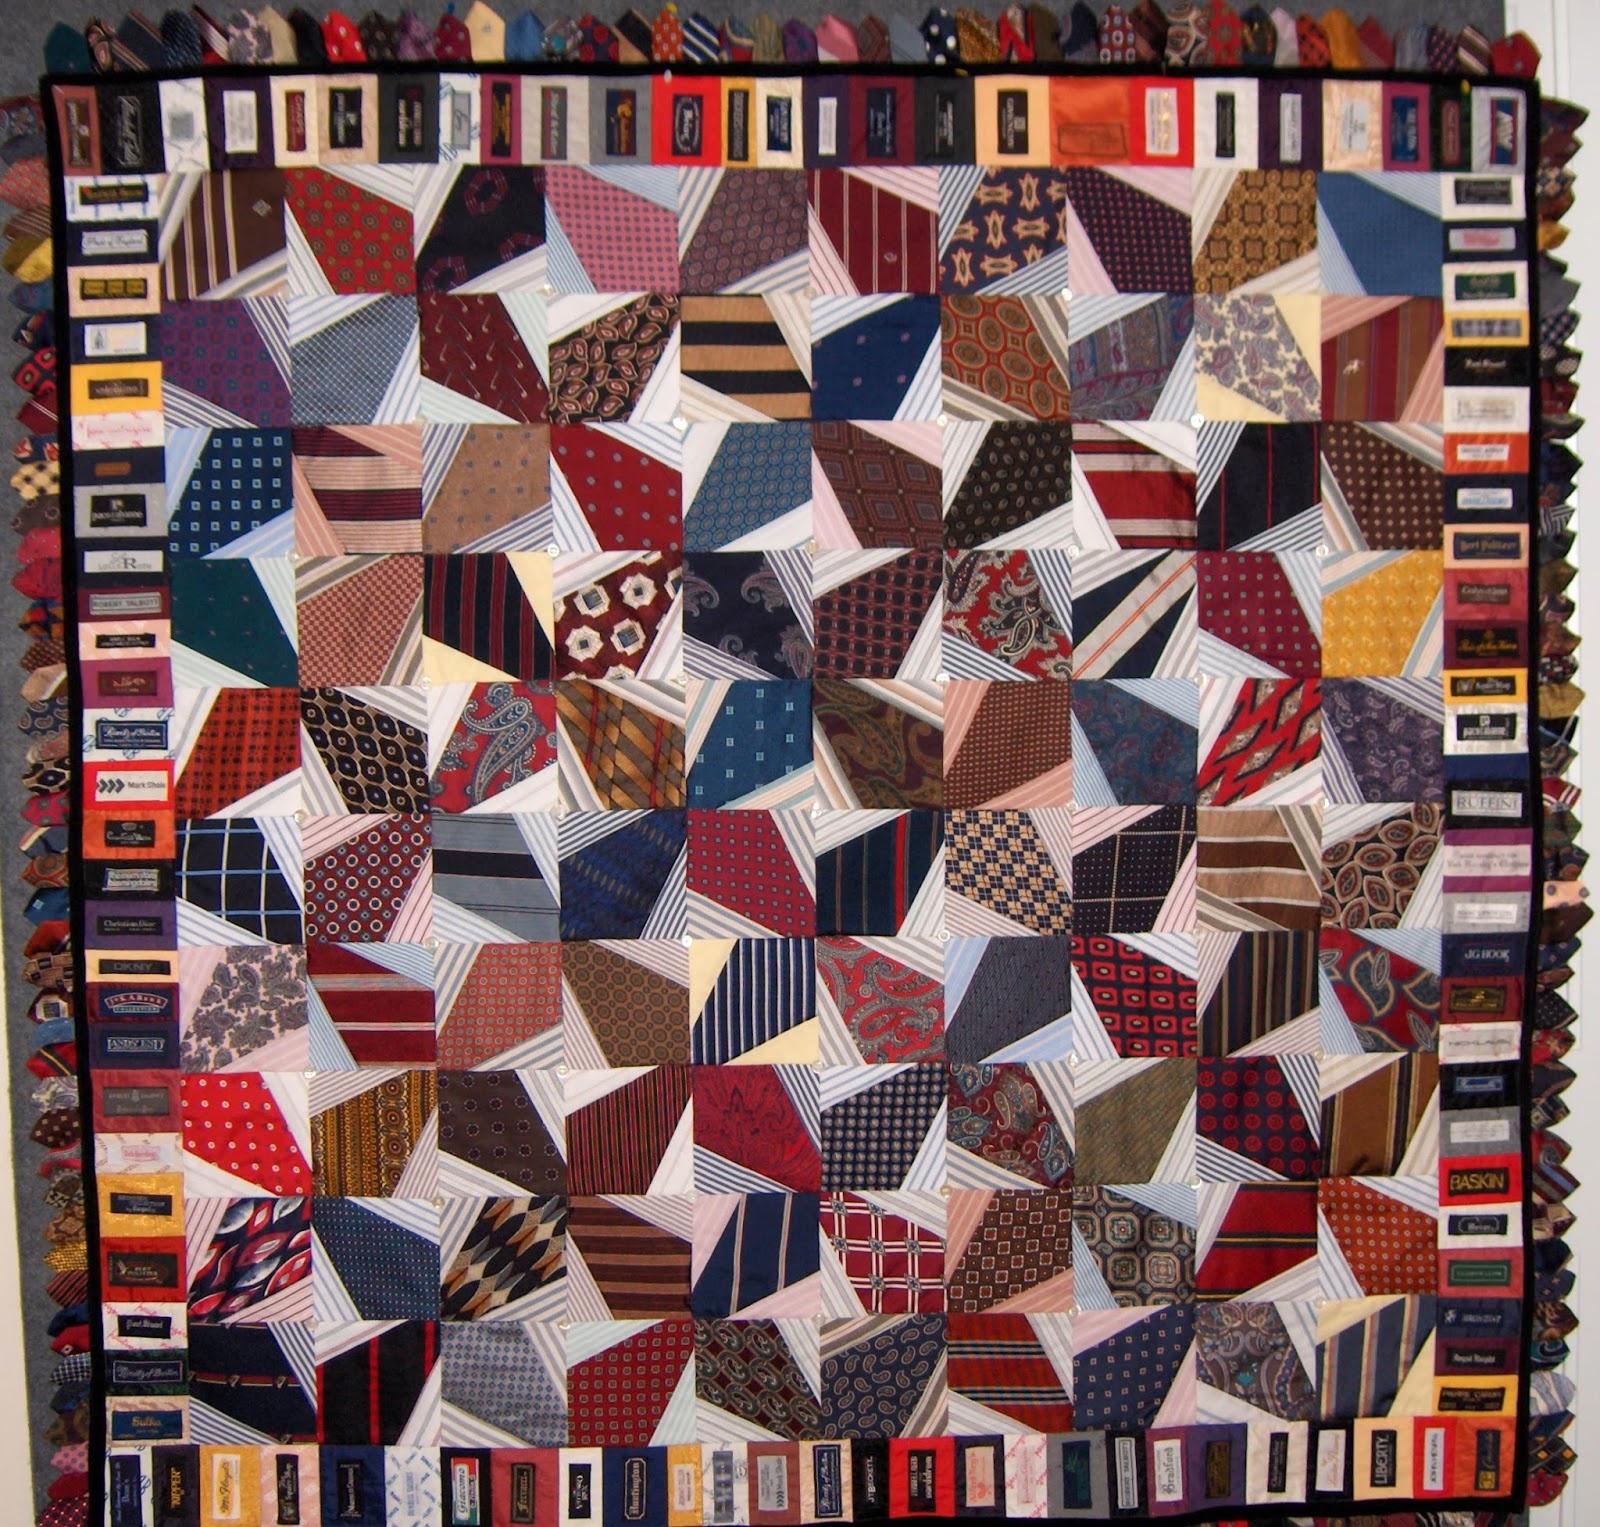 Quilt Inspiration: Necktie quilts for Dad